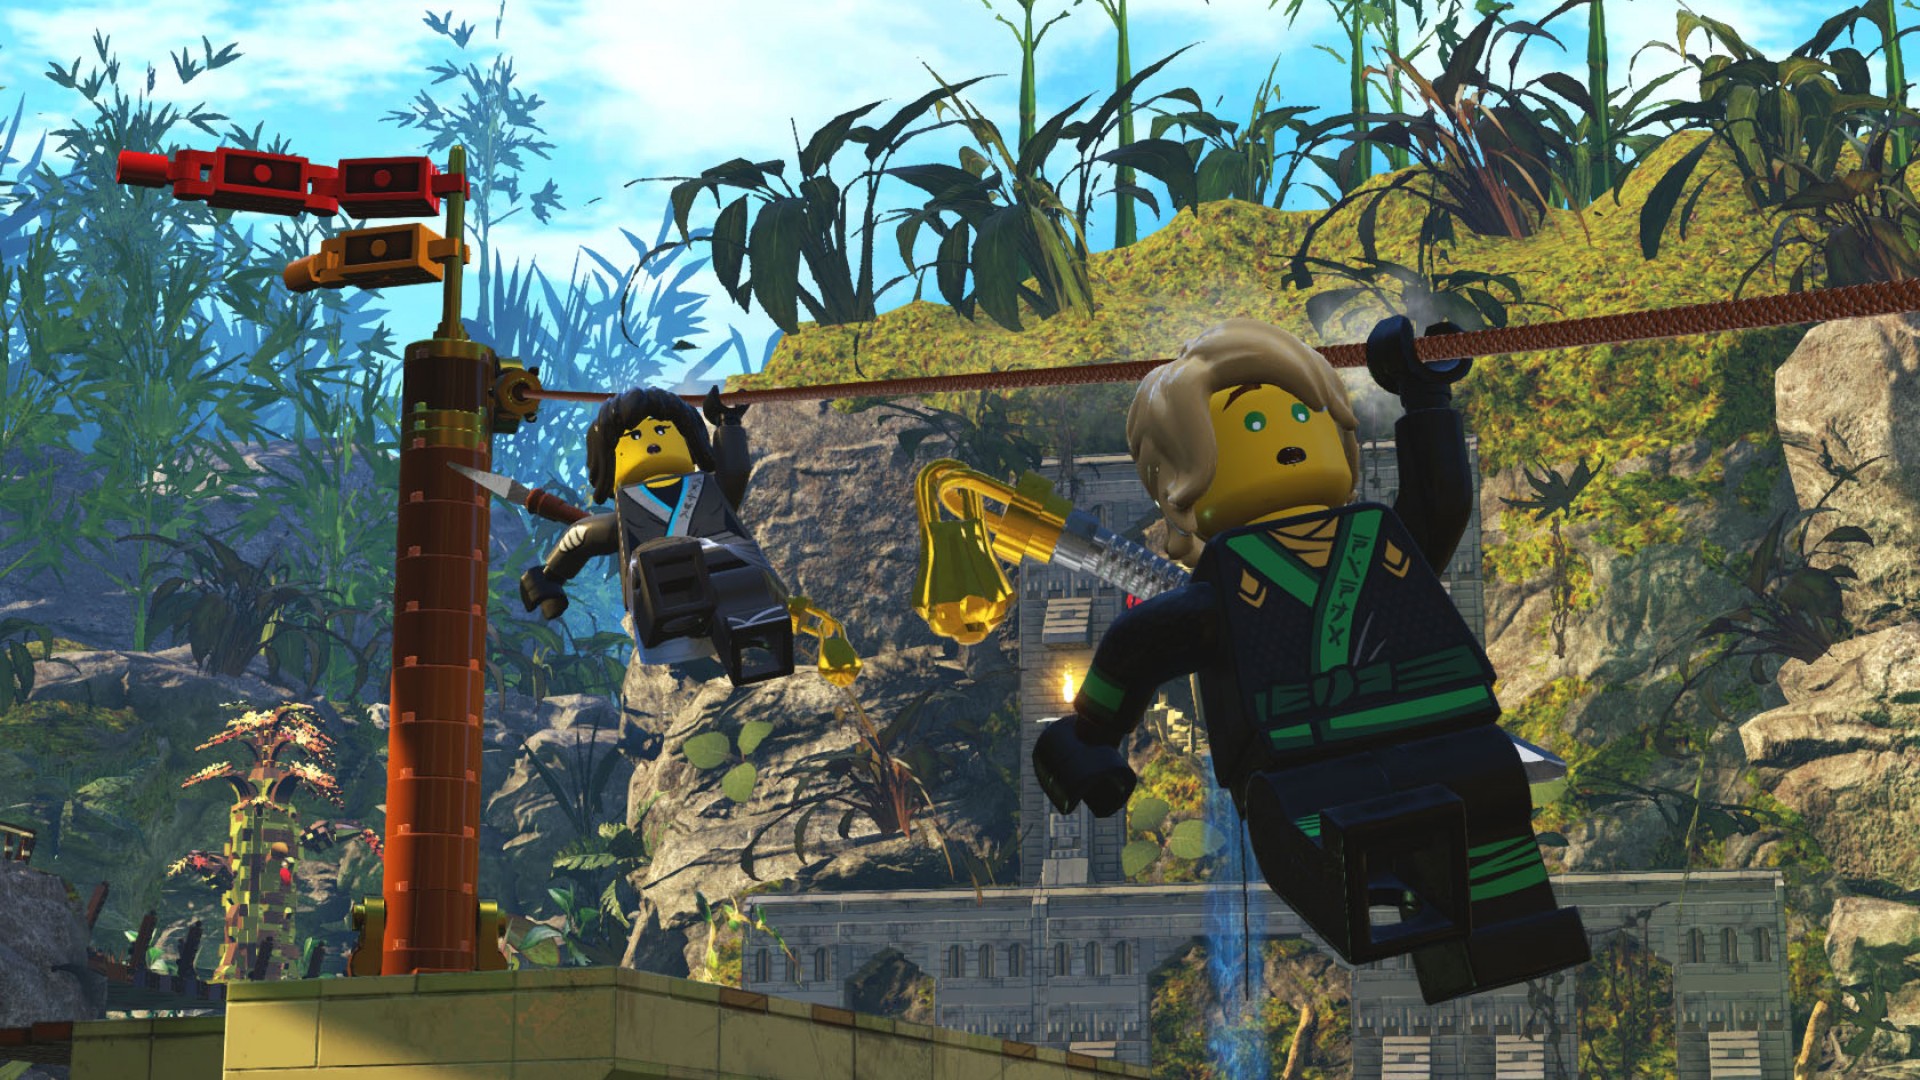 LEGO Ninjago Movie Game Xbox One